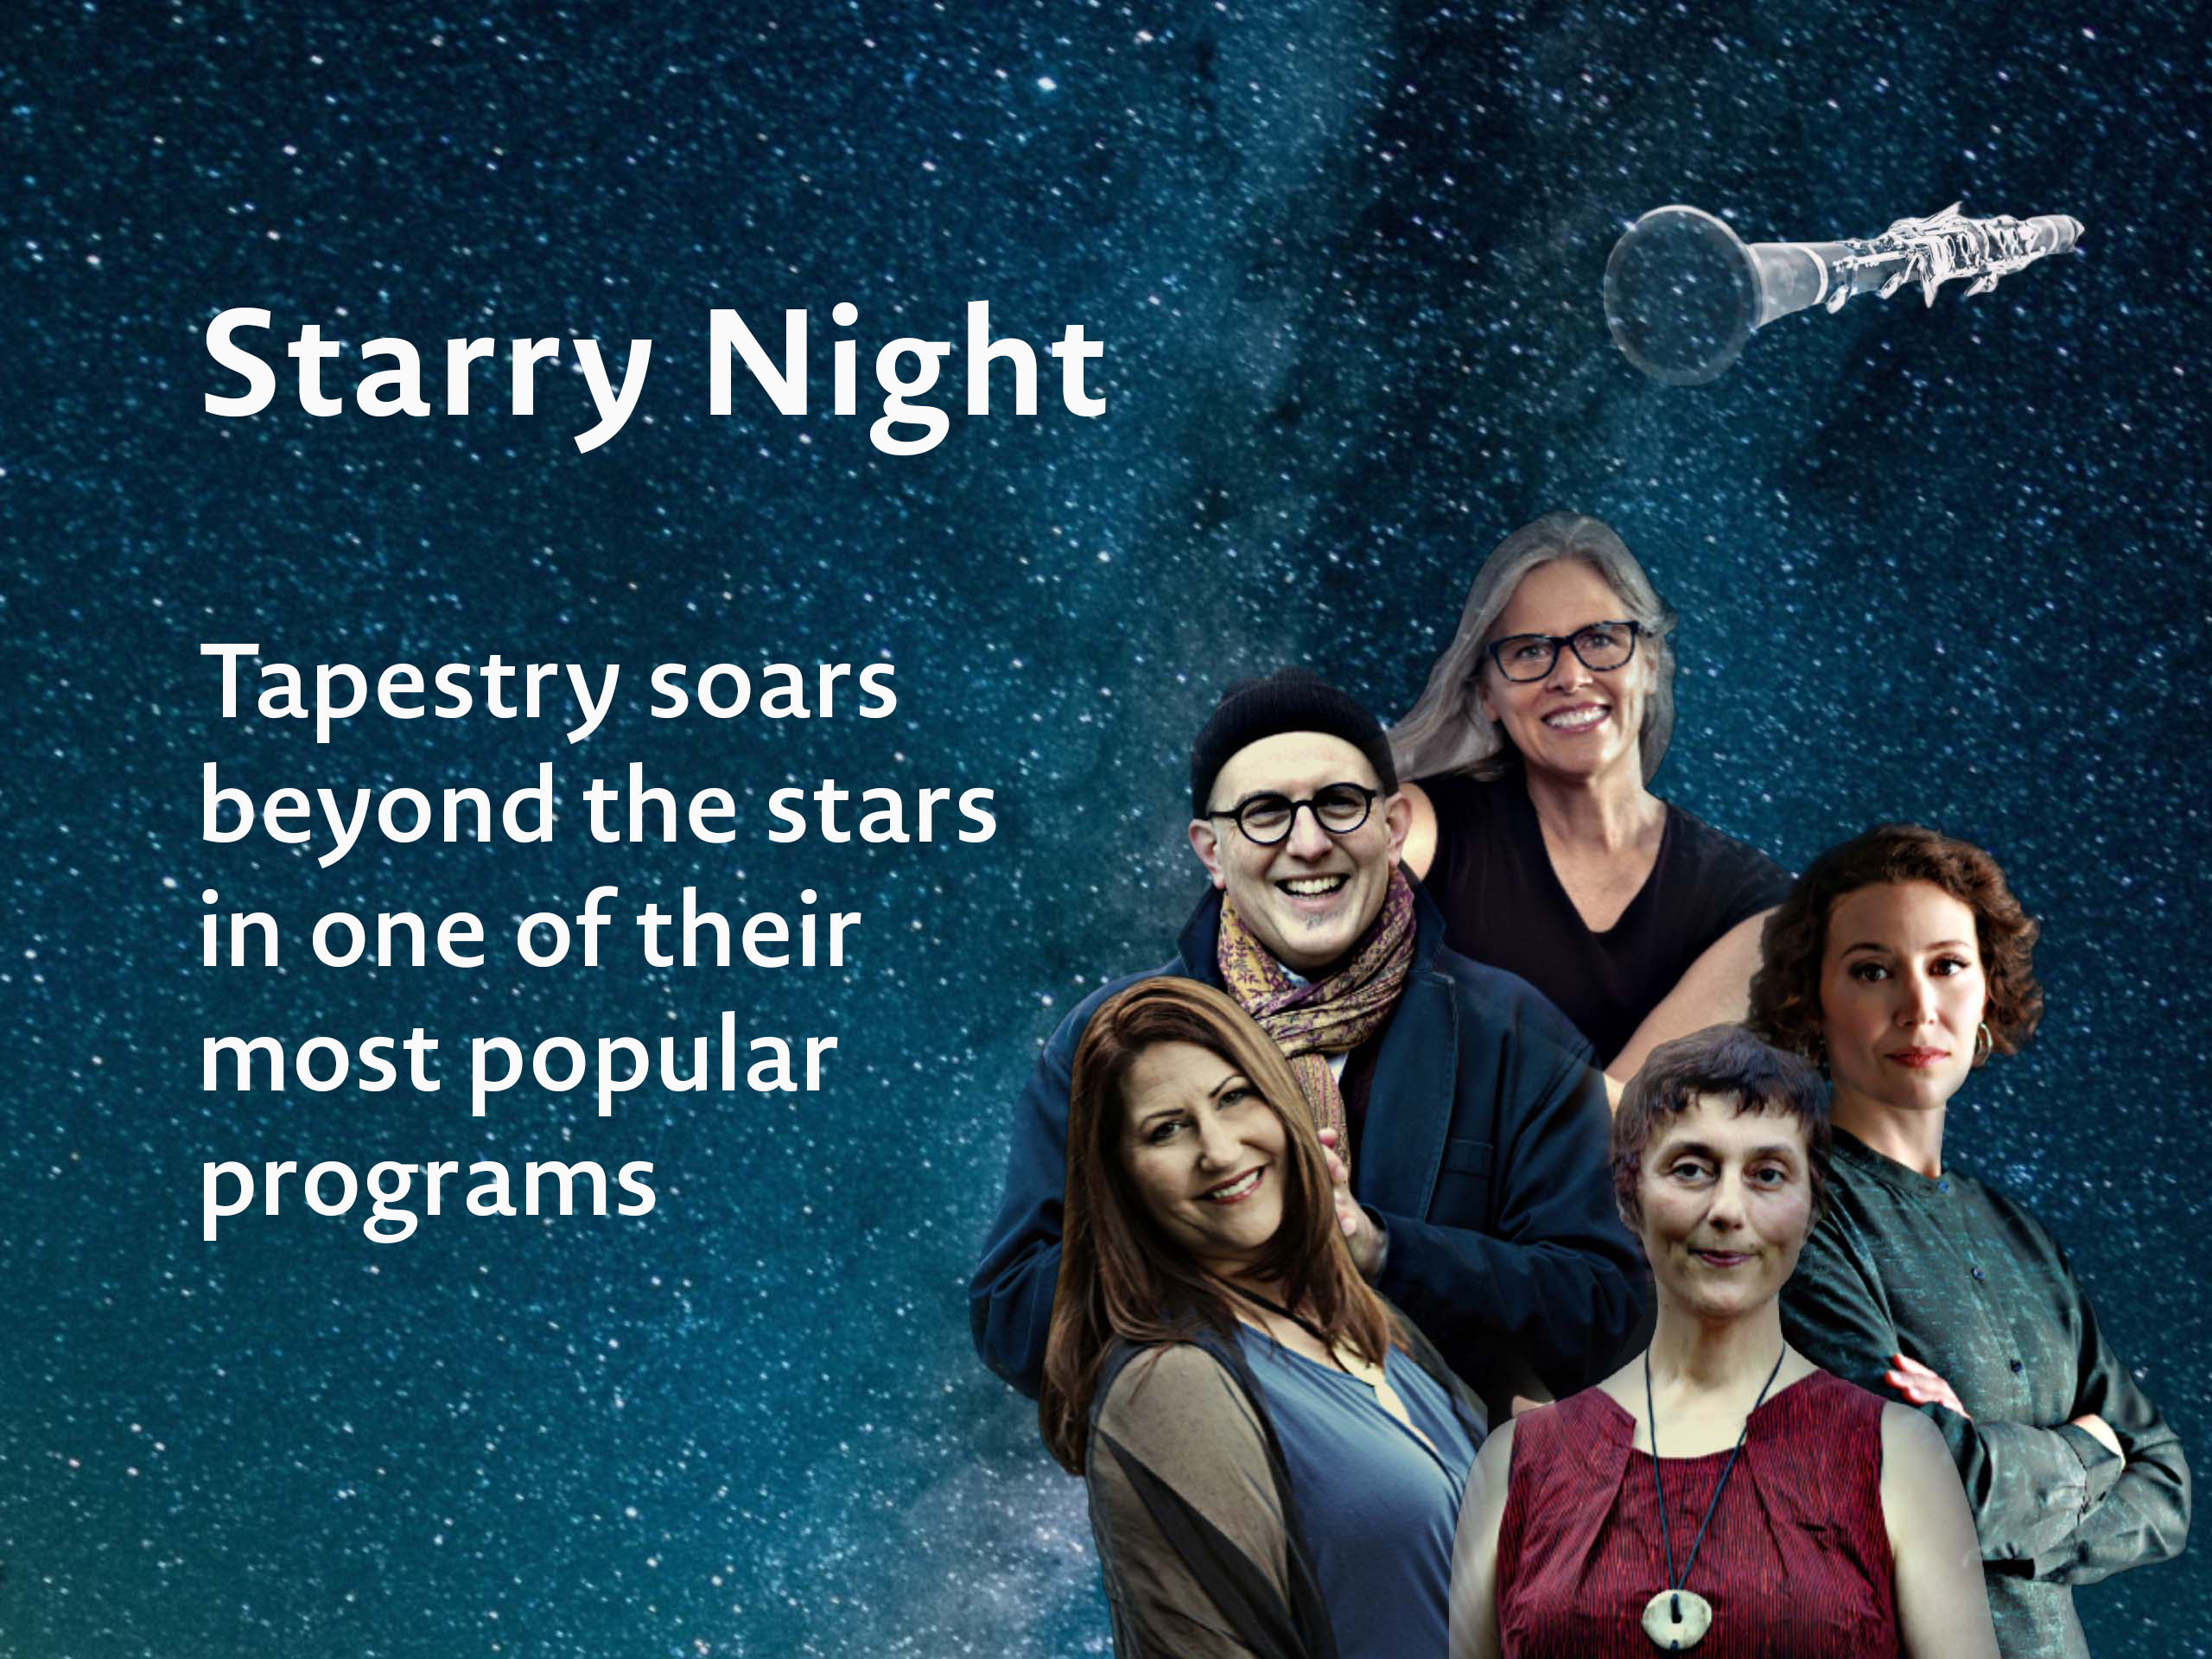 Starry Night program image